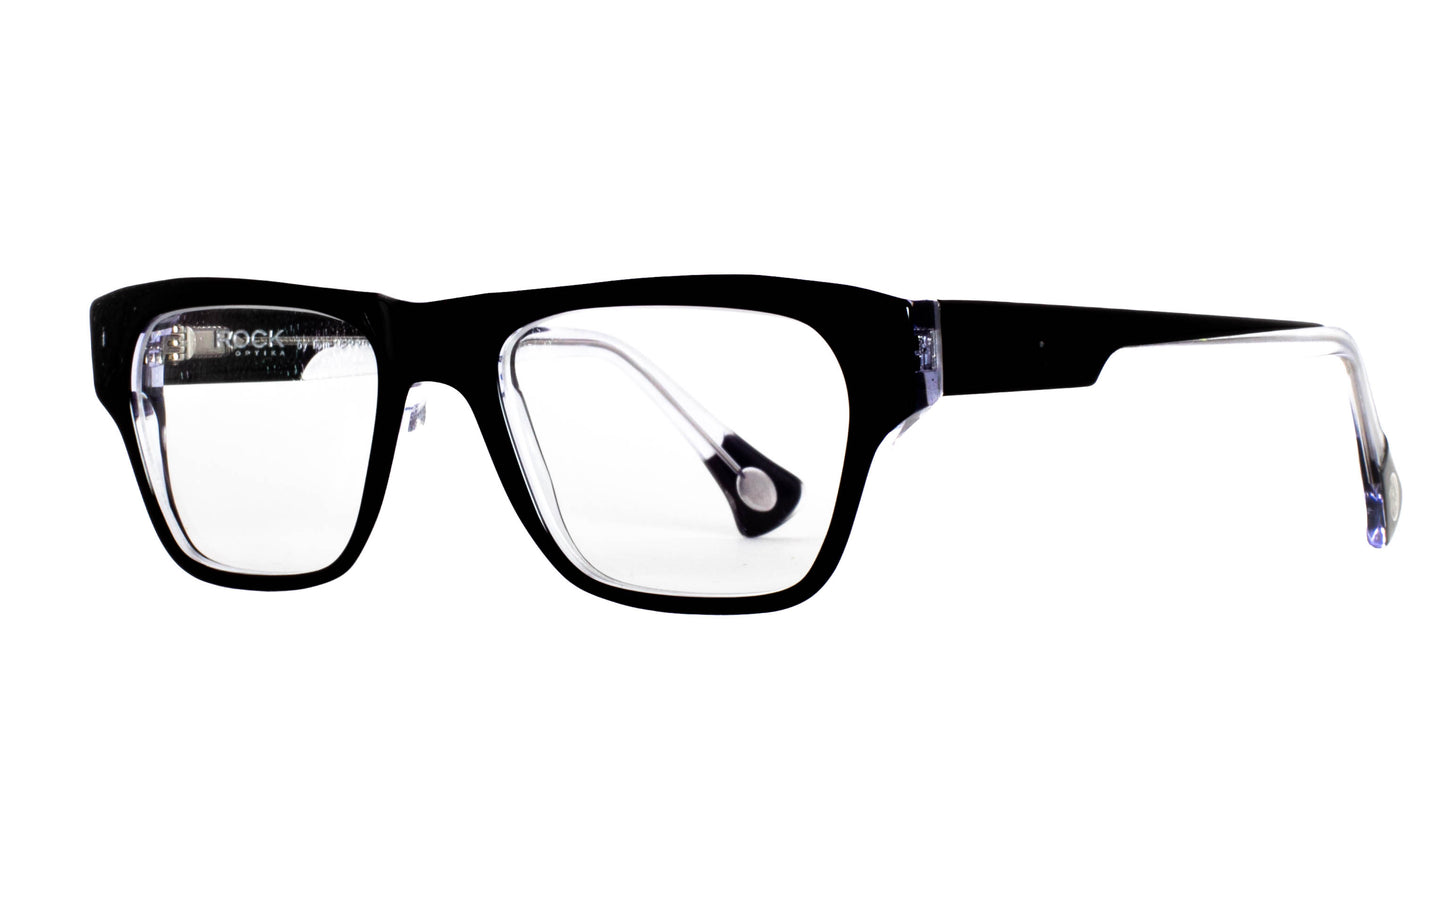 Saiph Spectacles